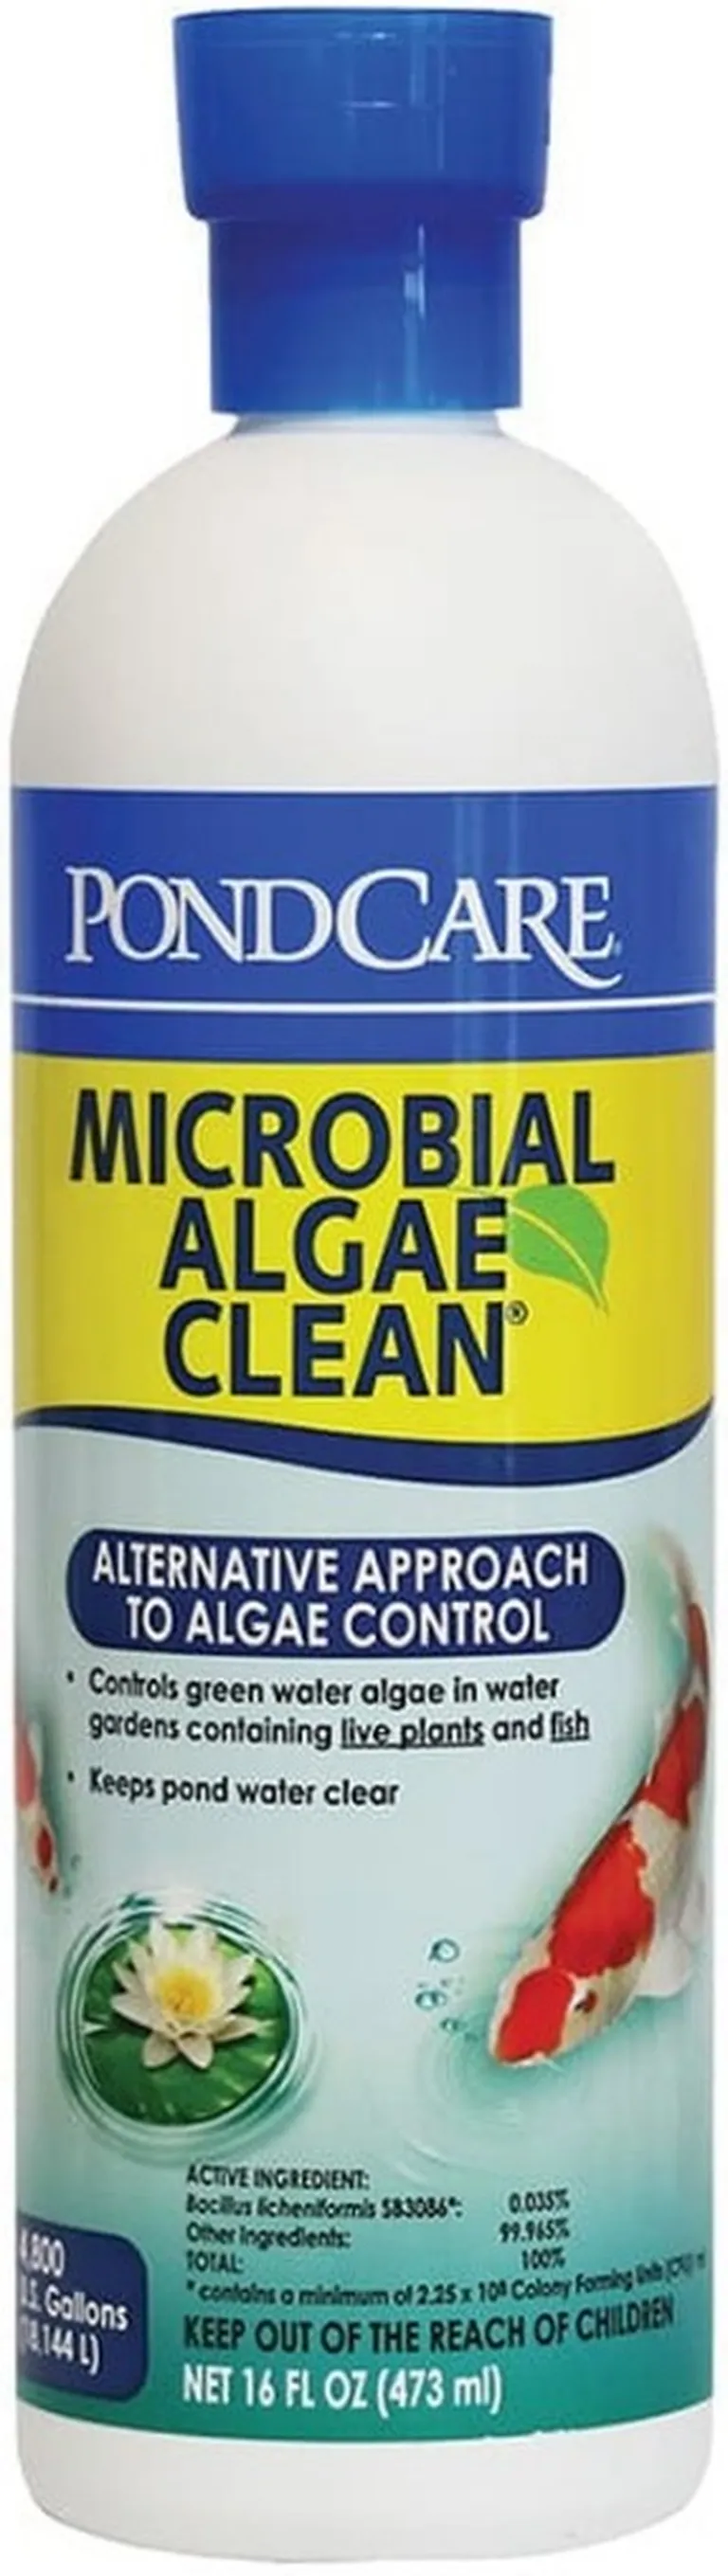 PondCare Microbial Algae Clean Photo 1